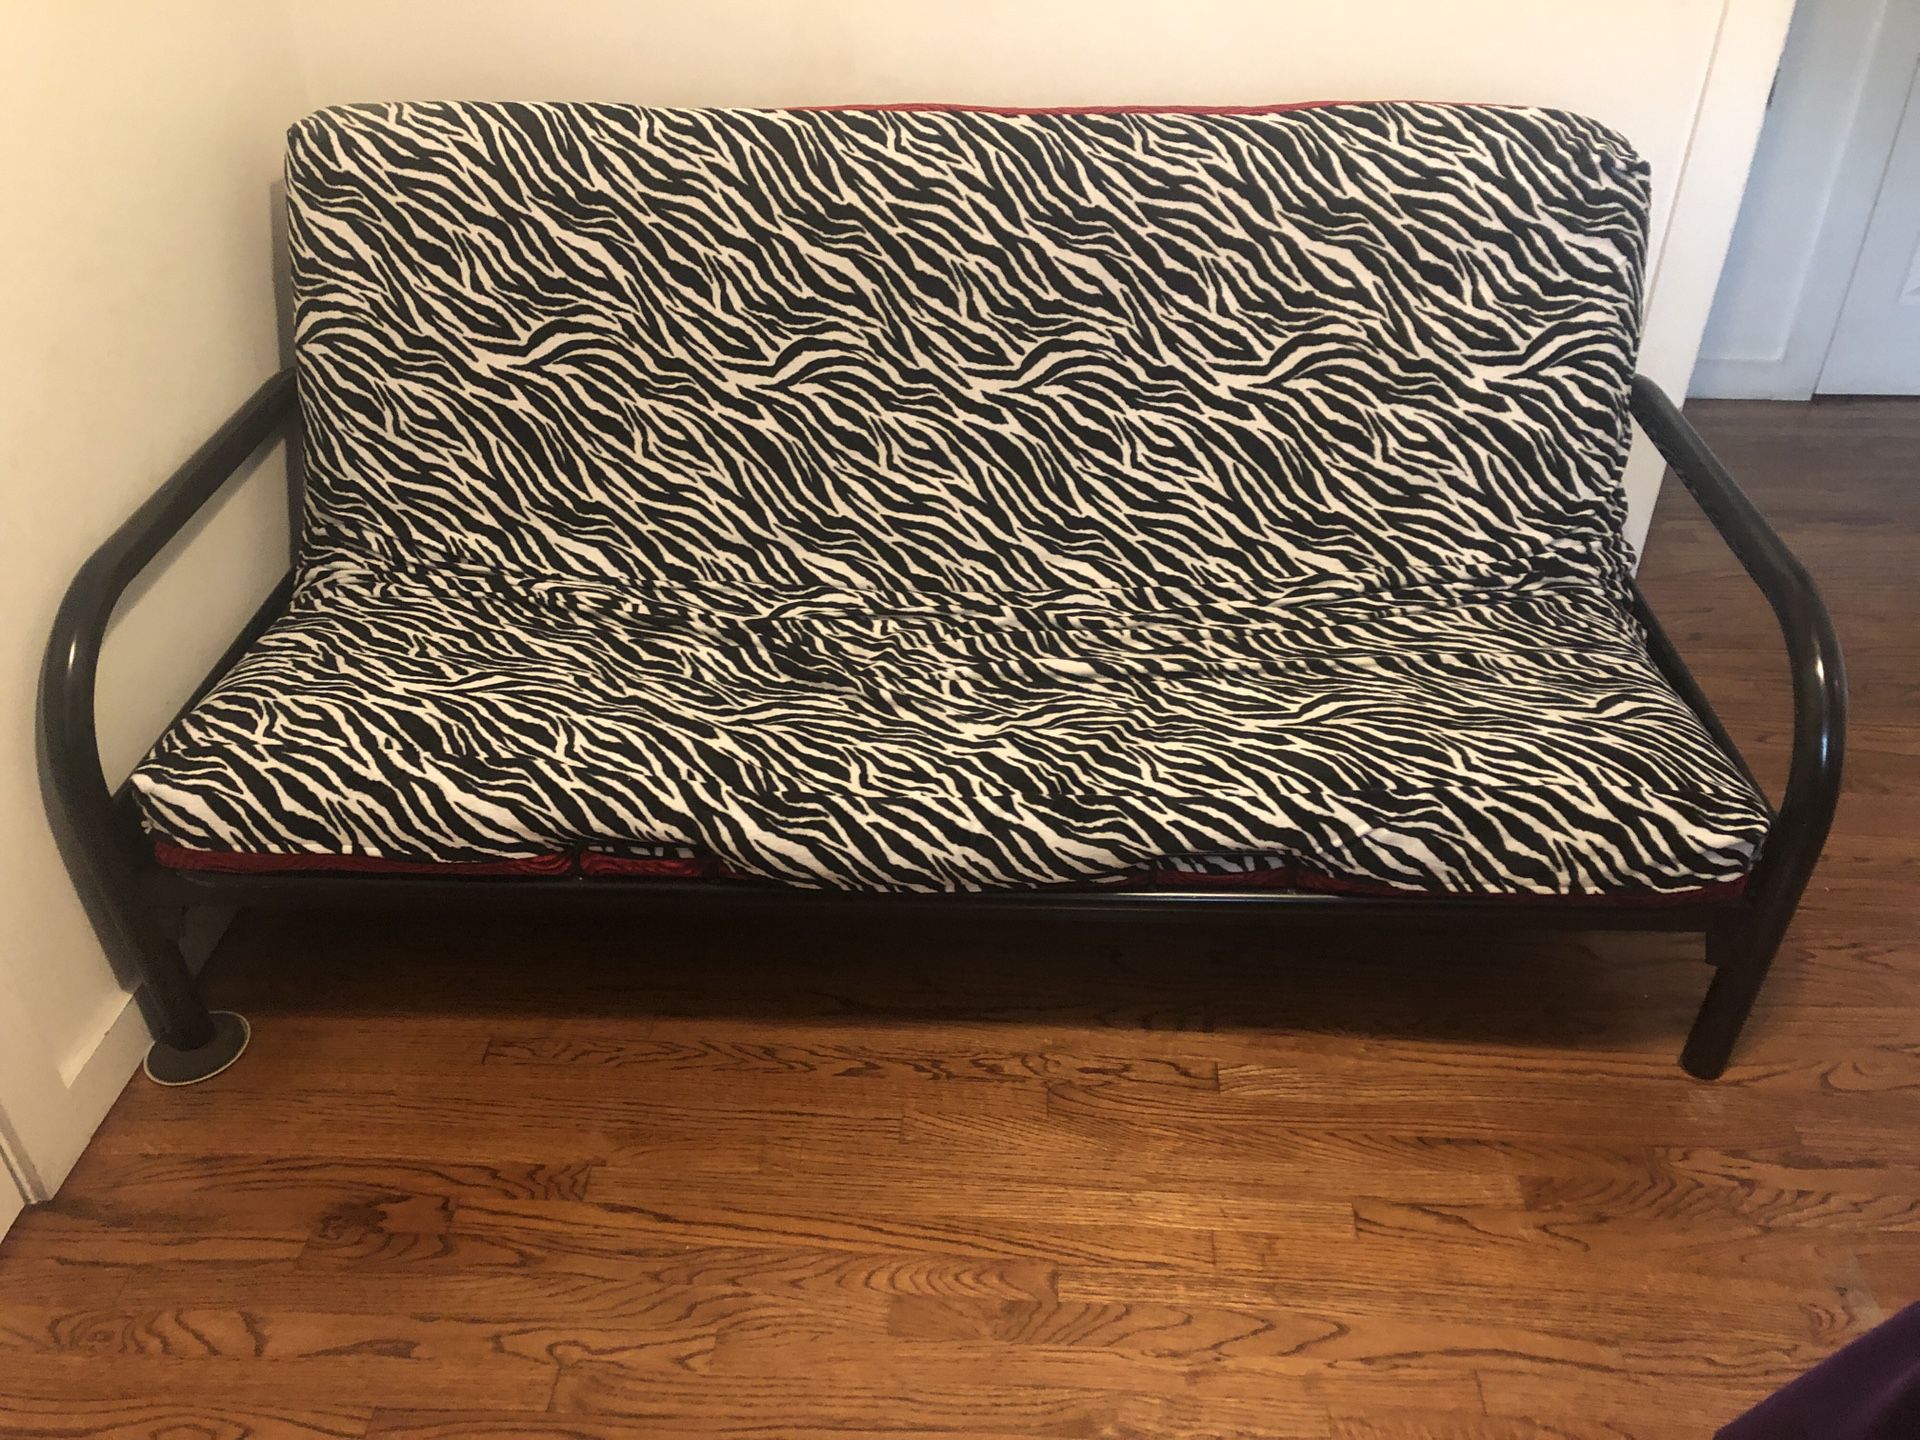 Reversible futon twin size average condition